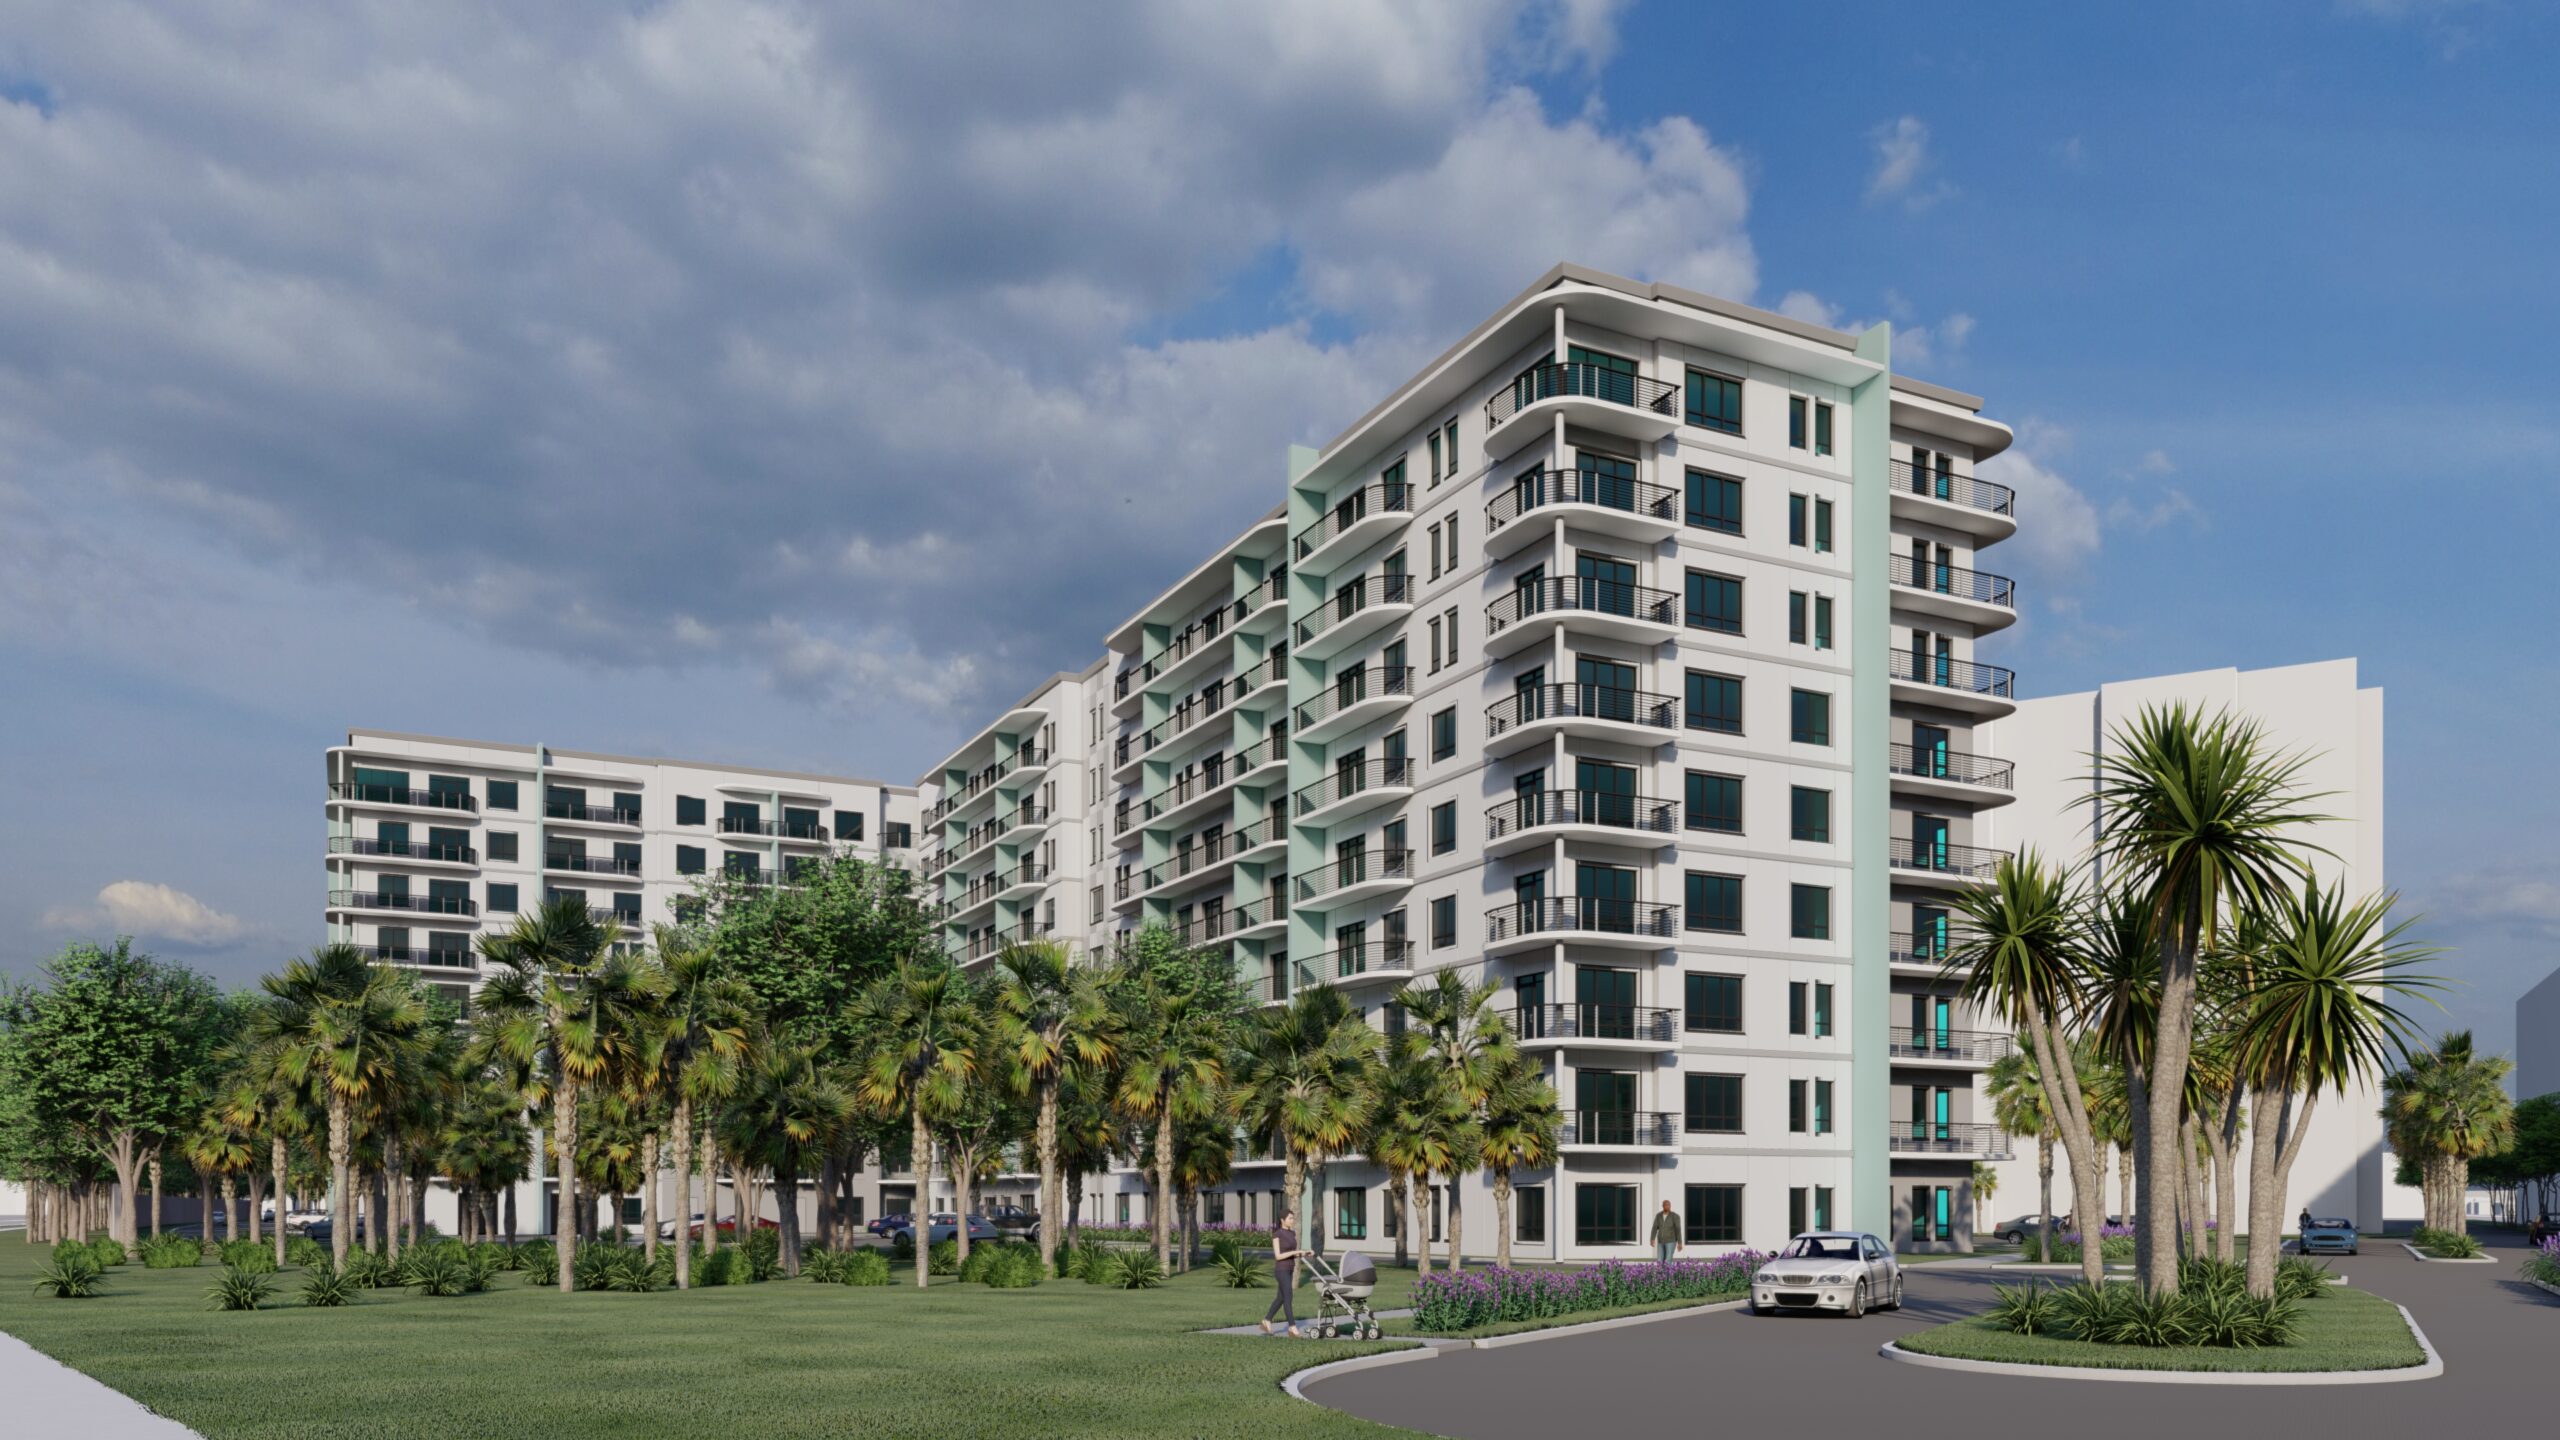 Rendering of Aliro apartments in Miami